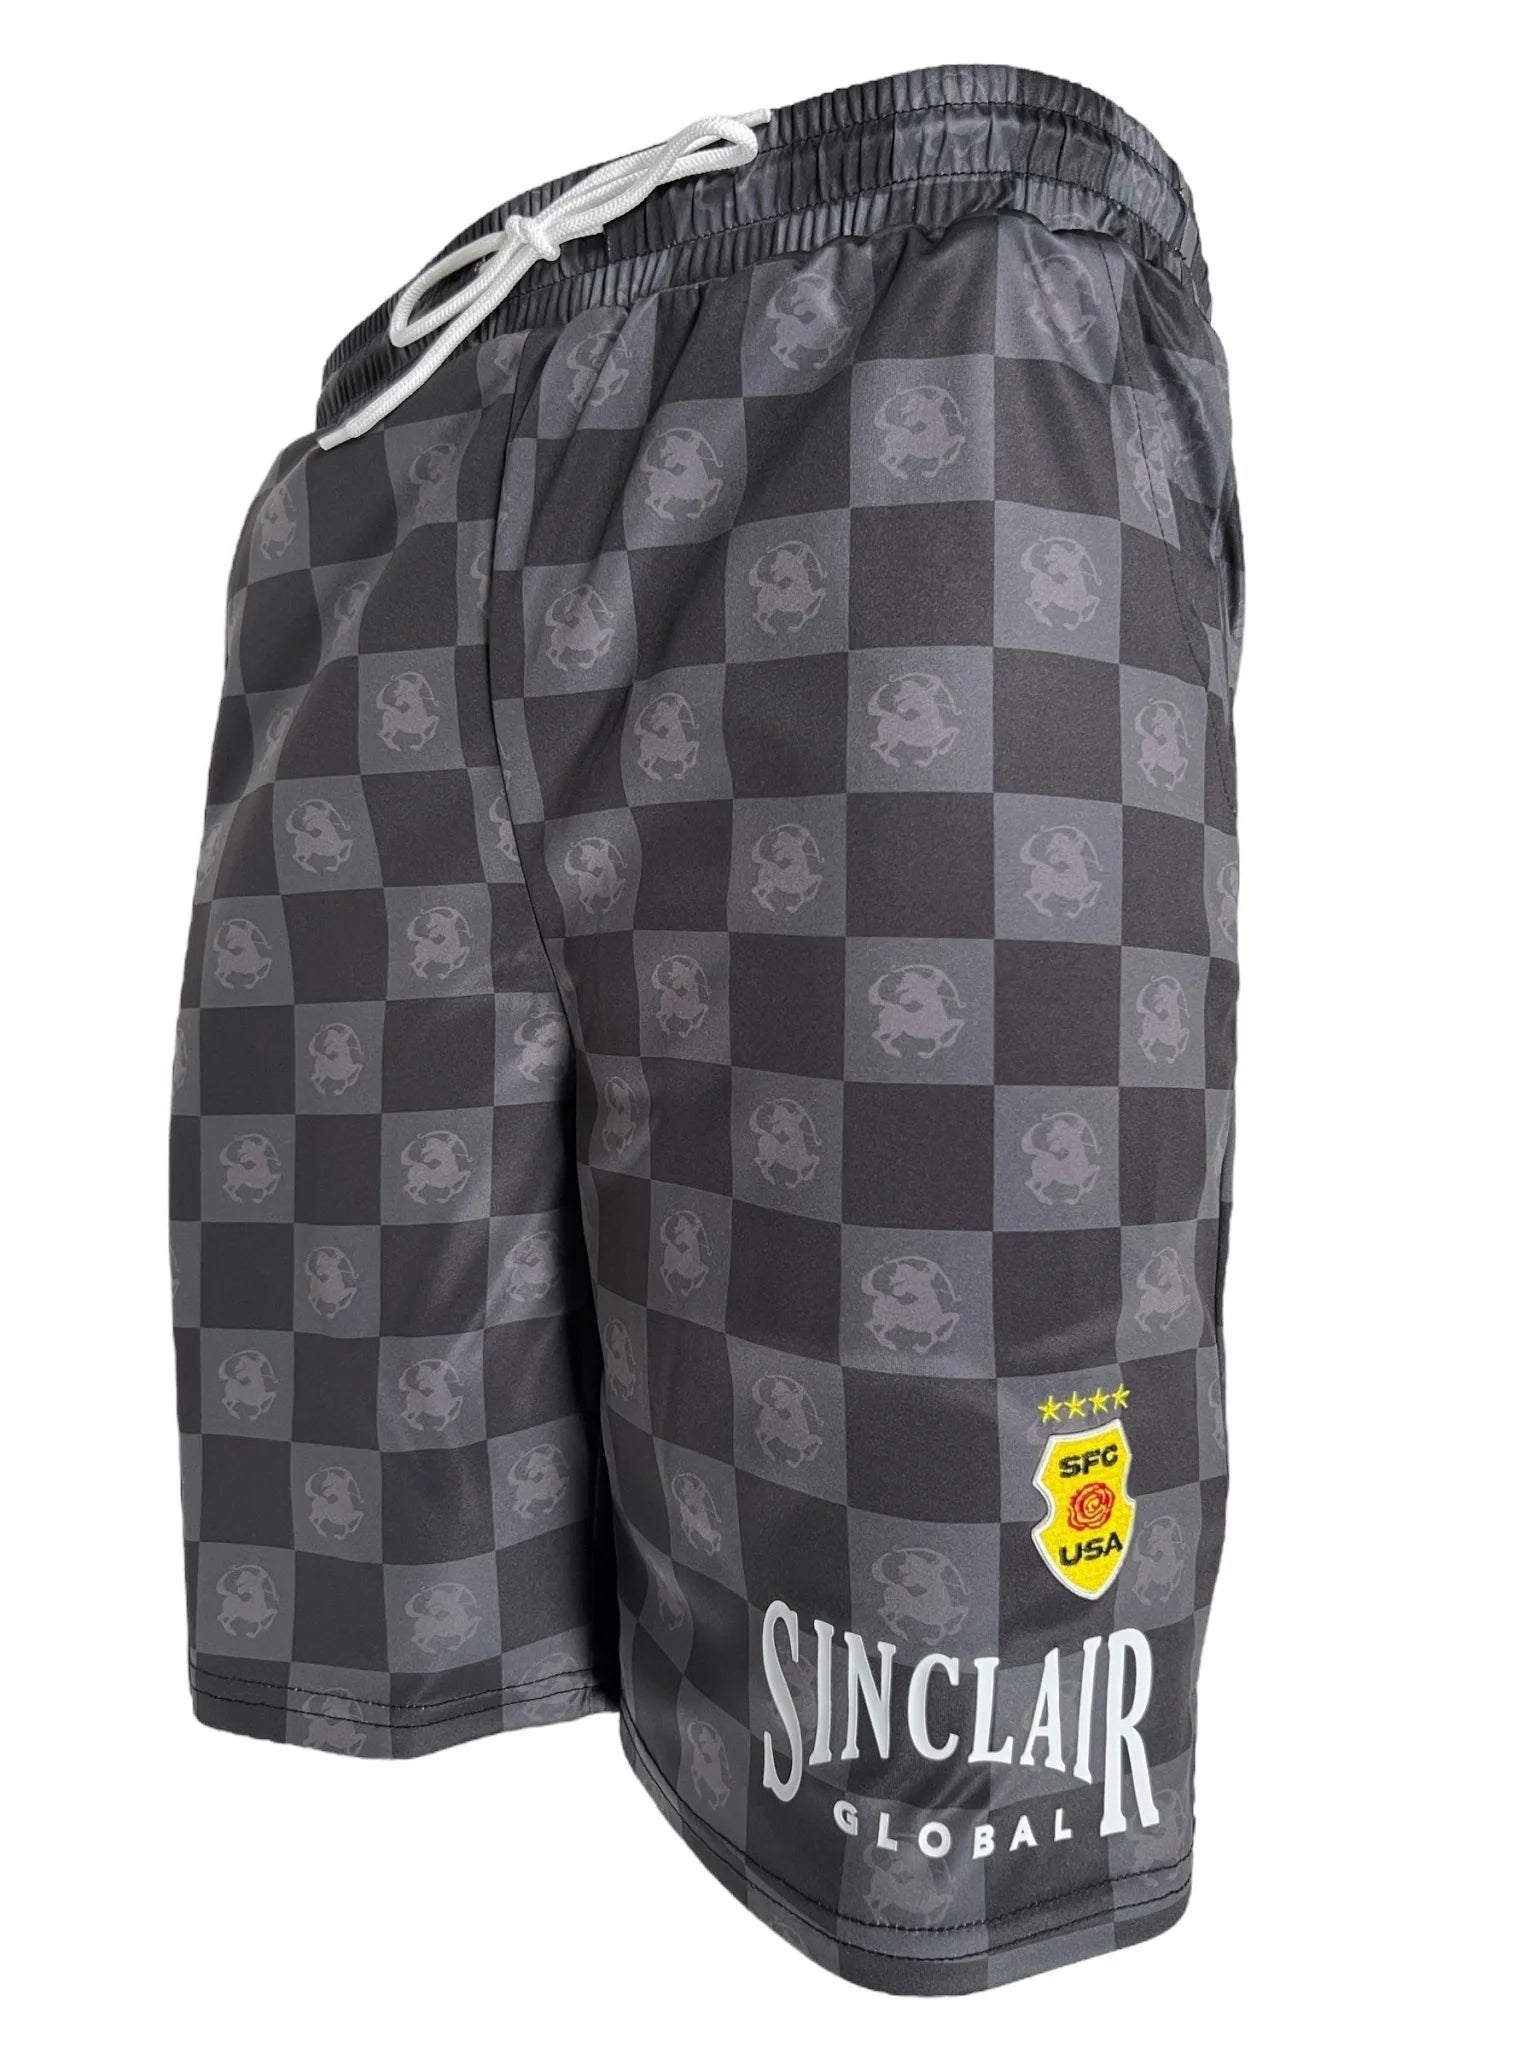 Sinclair Global Soccer Shorts 'Black'